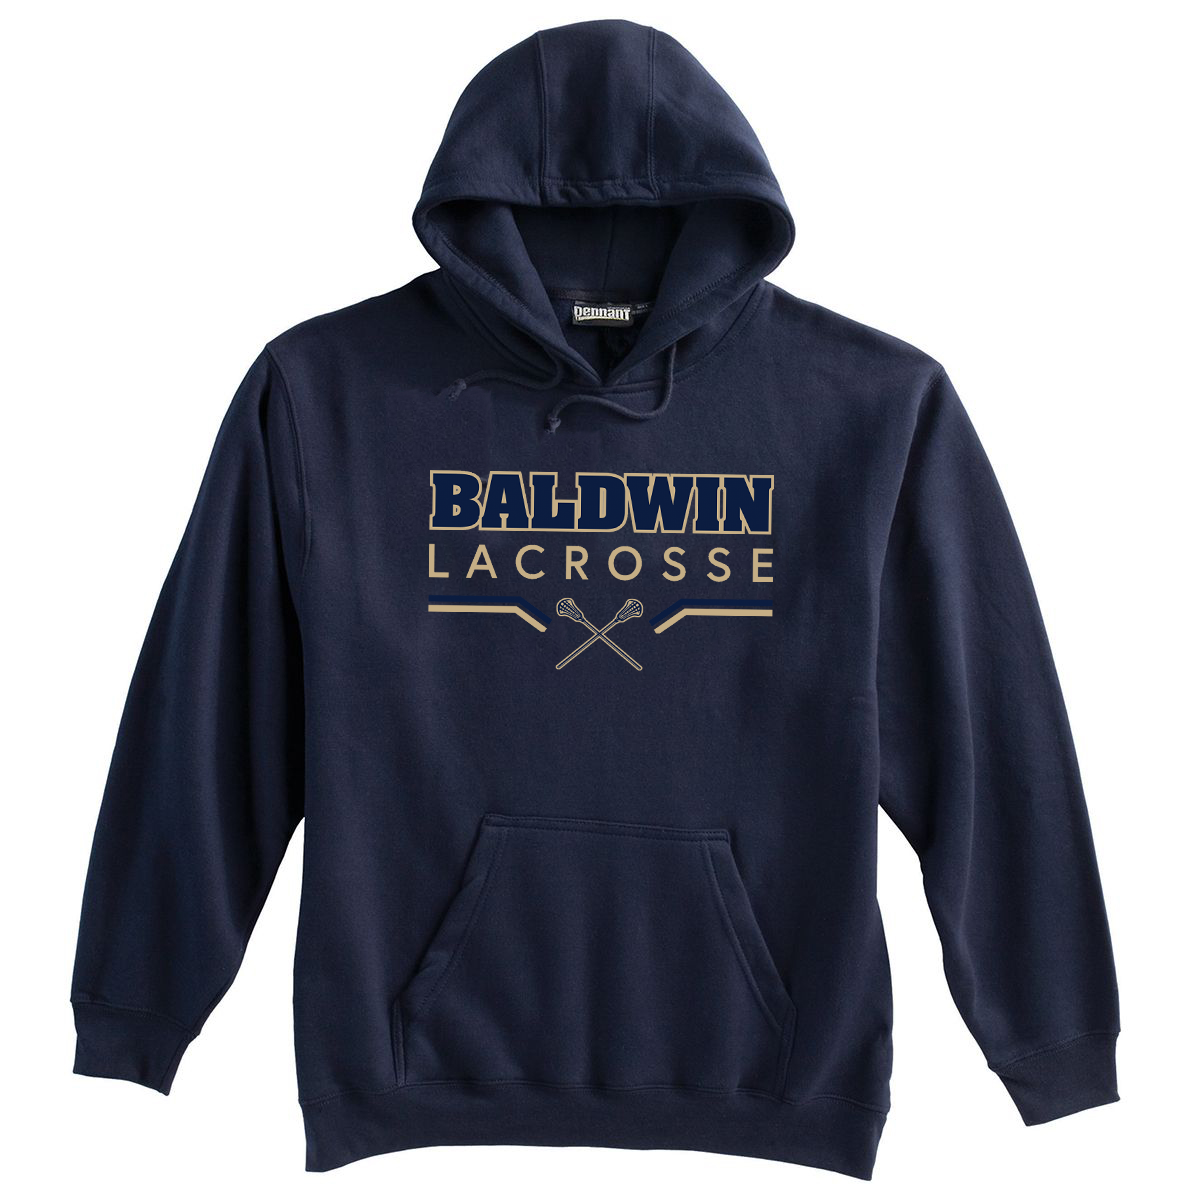 Baldwin HS Girls Lacrosse Sweatshirt